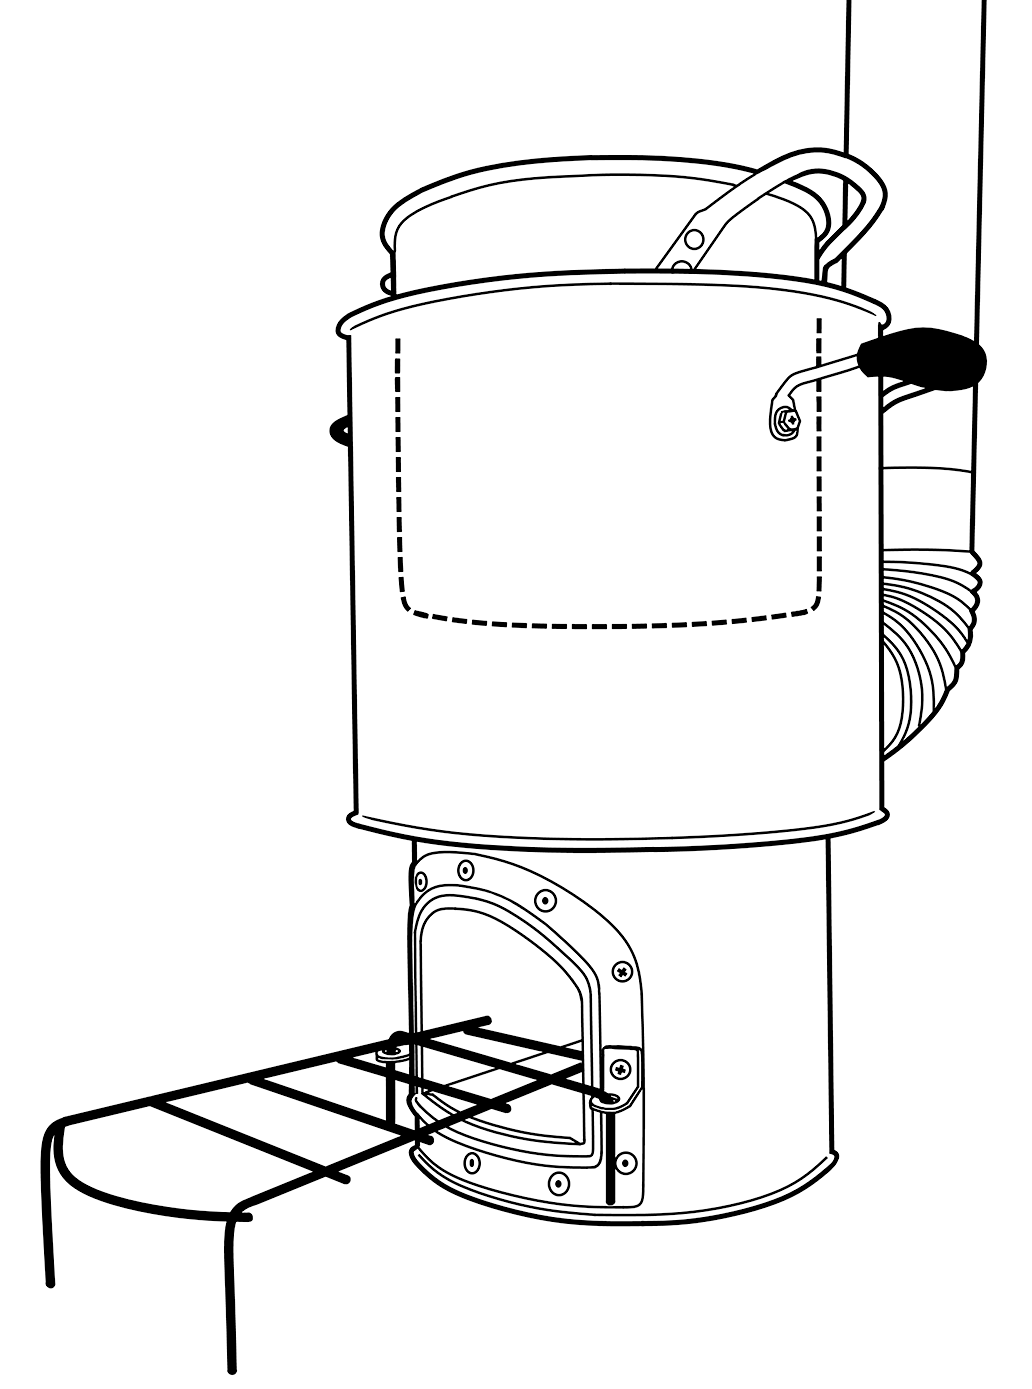 Winiarski sunken pot Rocket stove with chimney